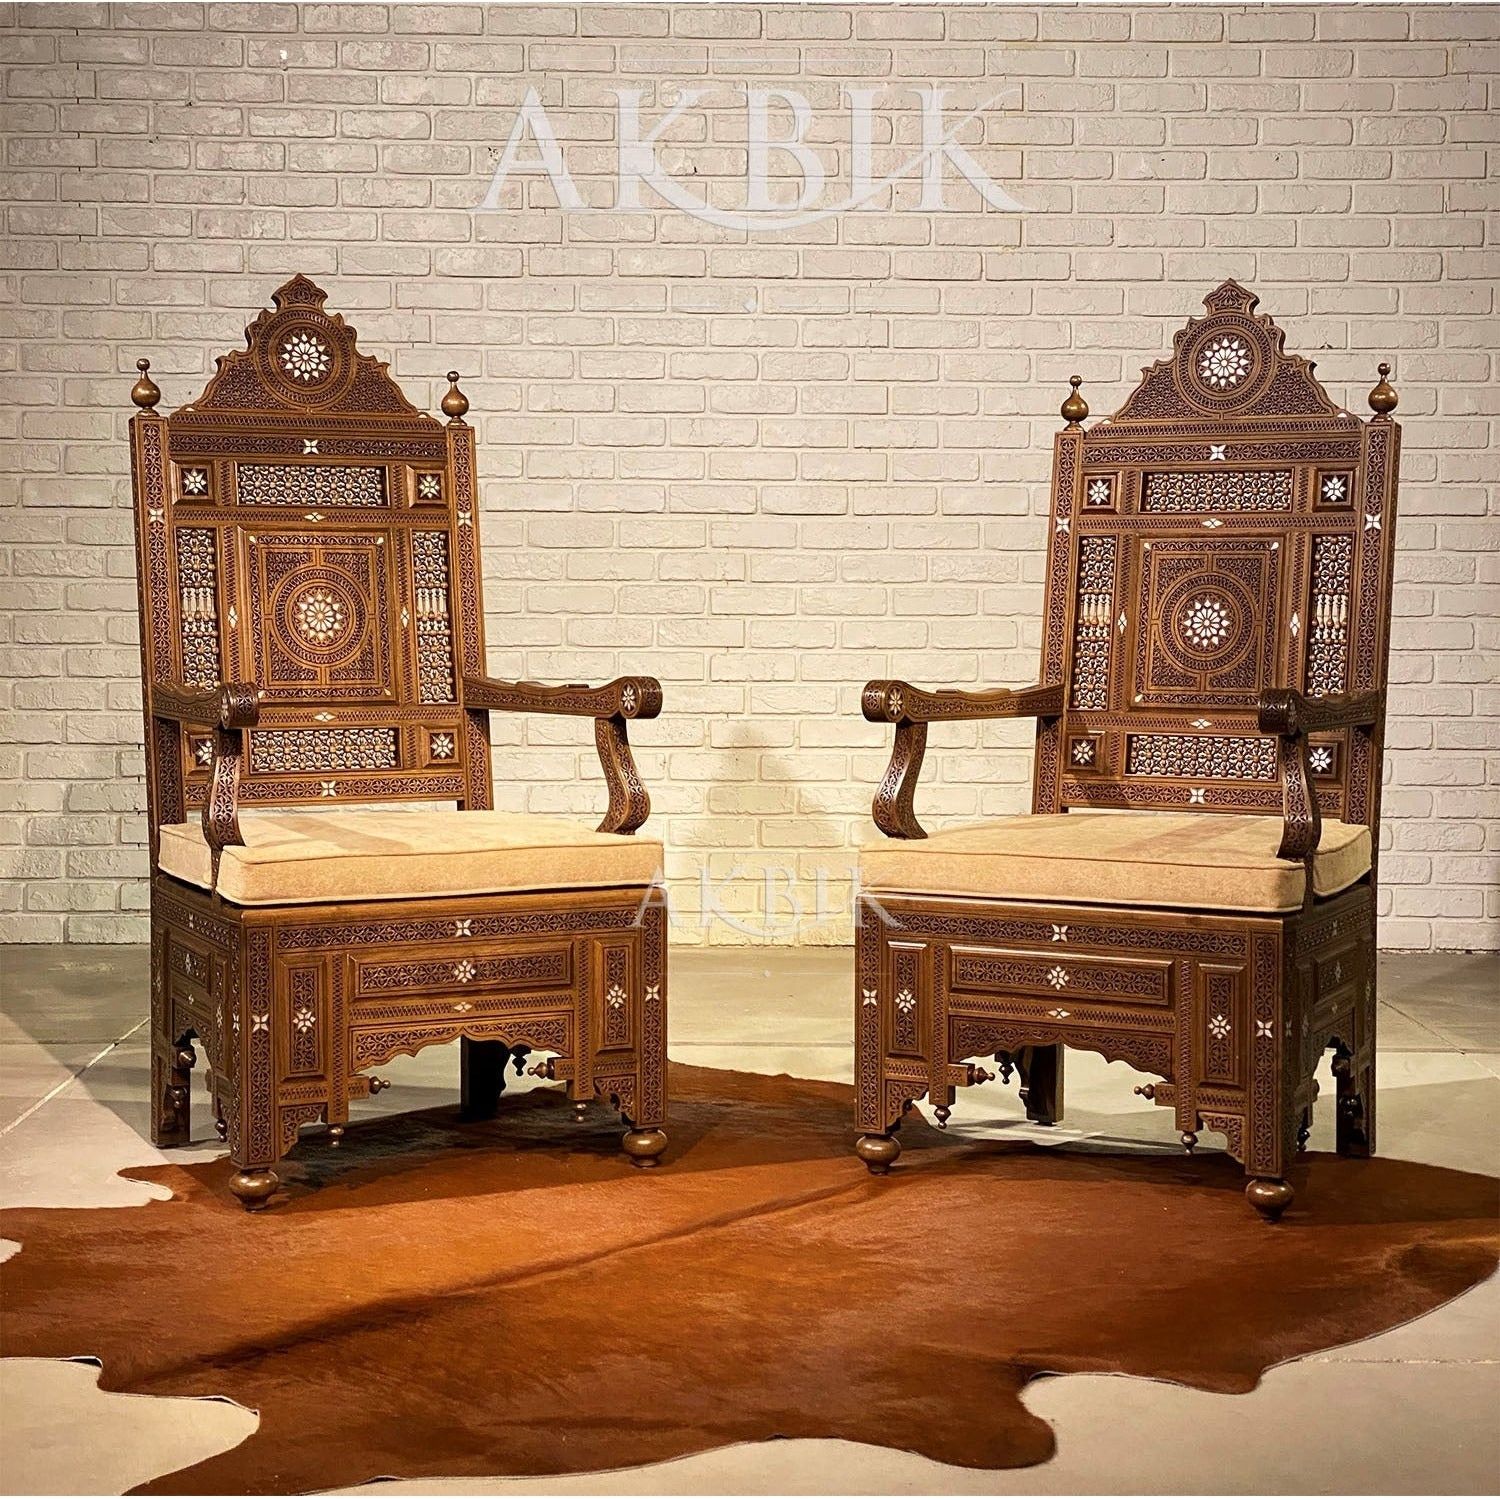 ARABIAN CHAIRS SET - AKBIK Furniture & Design